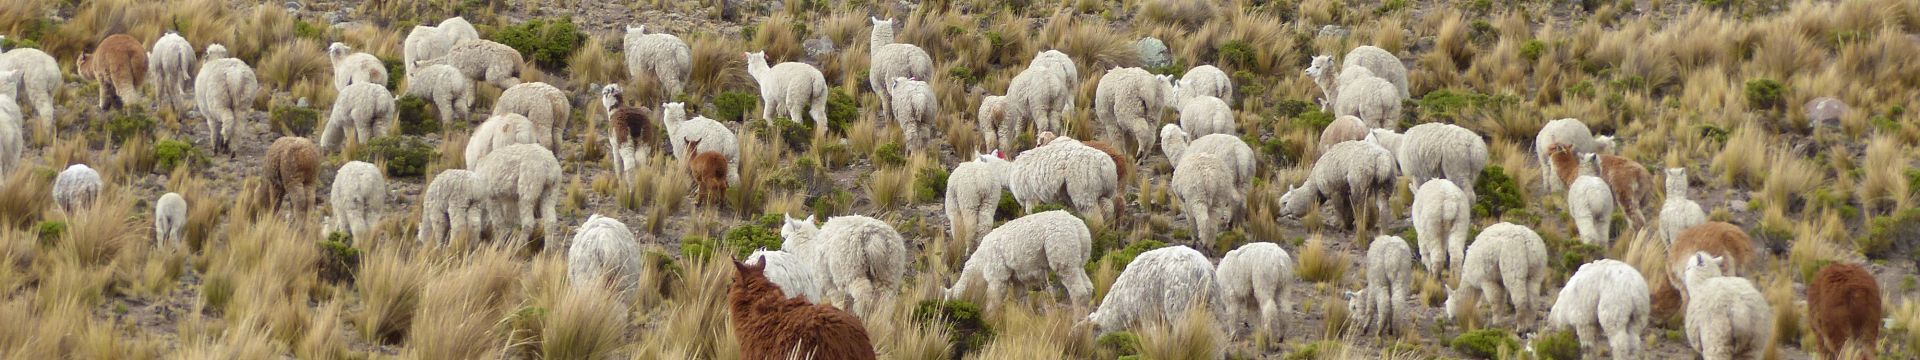 Pérou vigognes